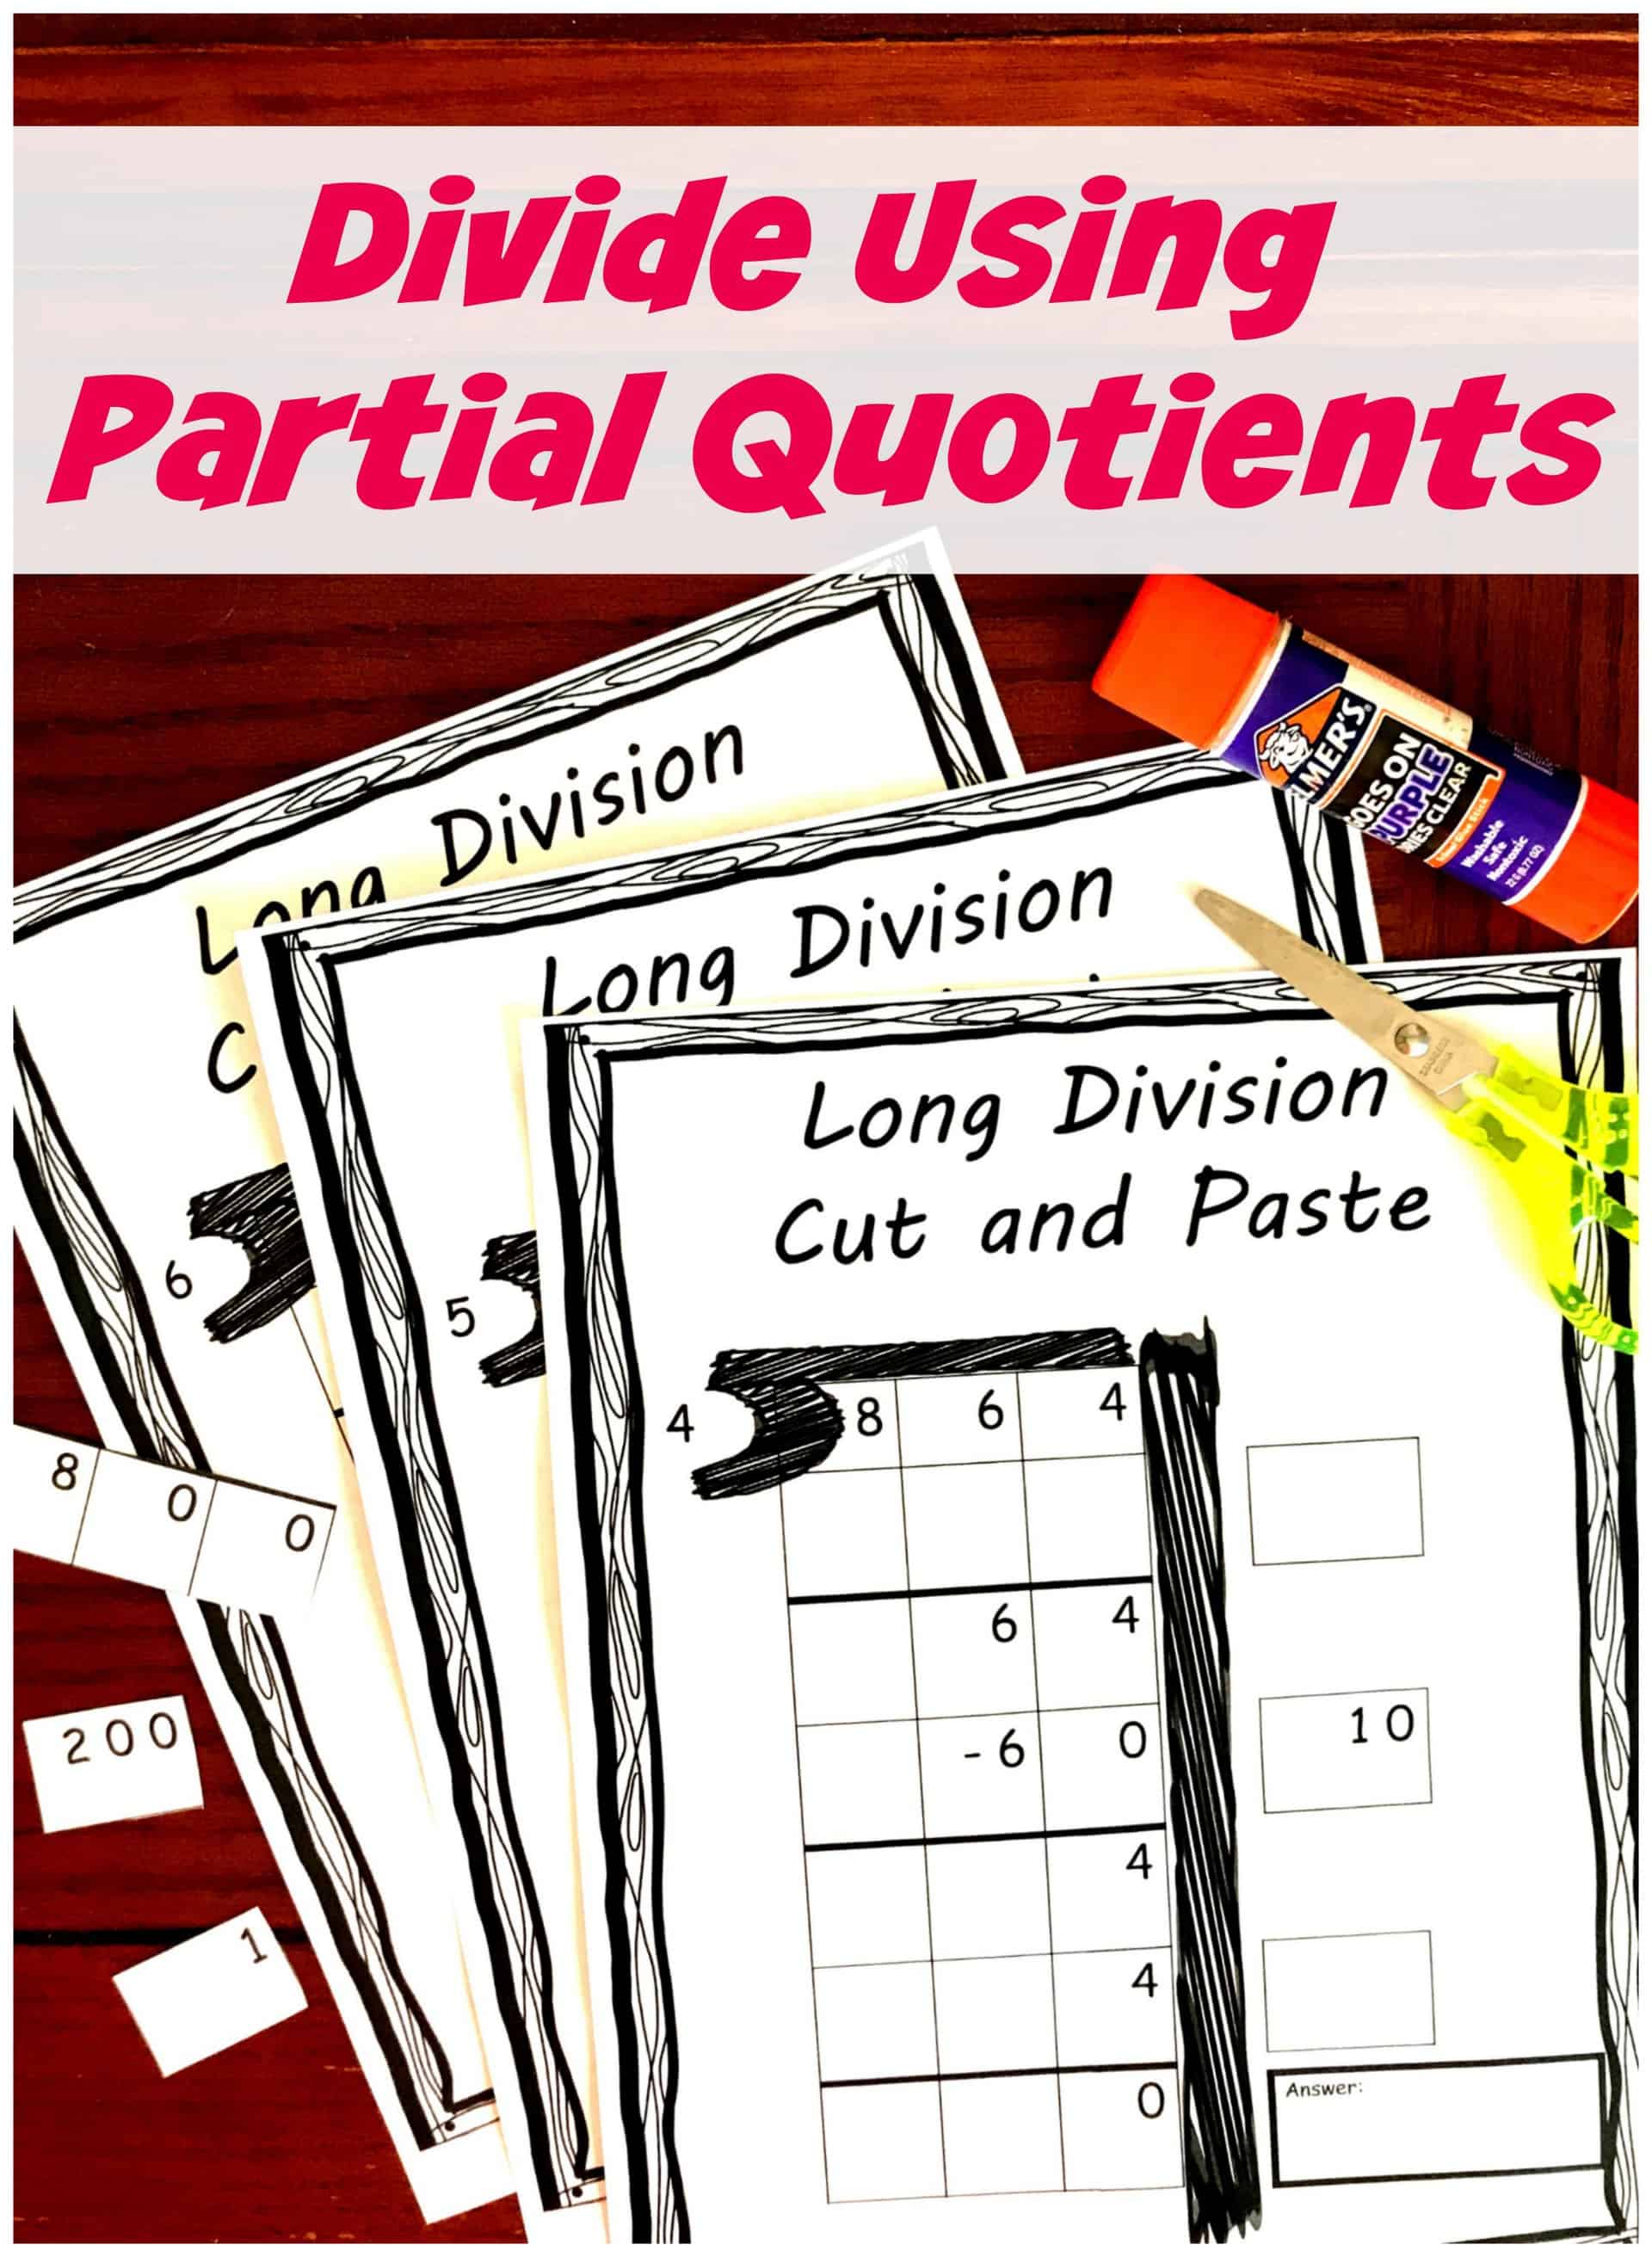 FREE Divide using Partial Quotients Cut and Paste Activity